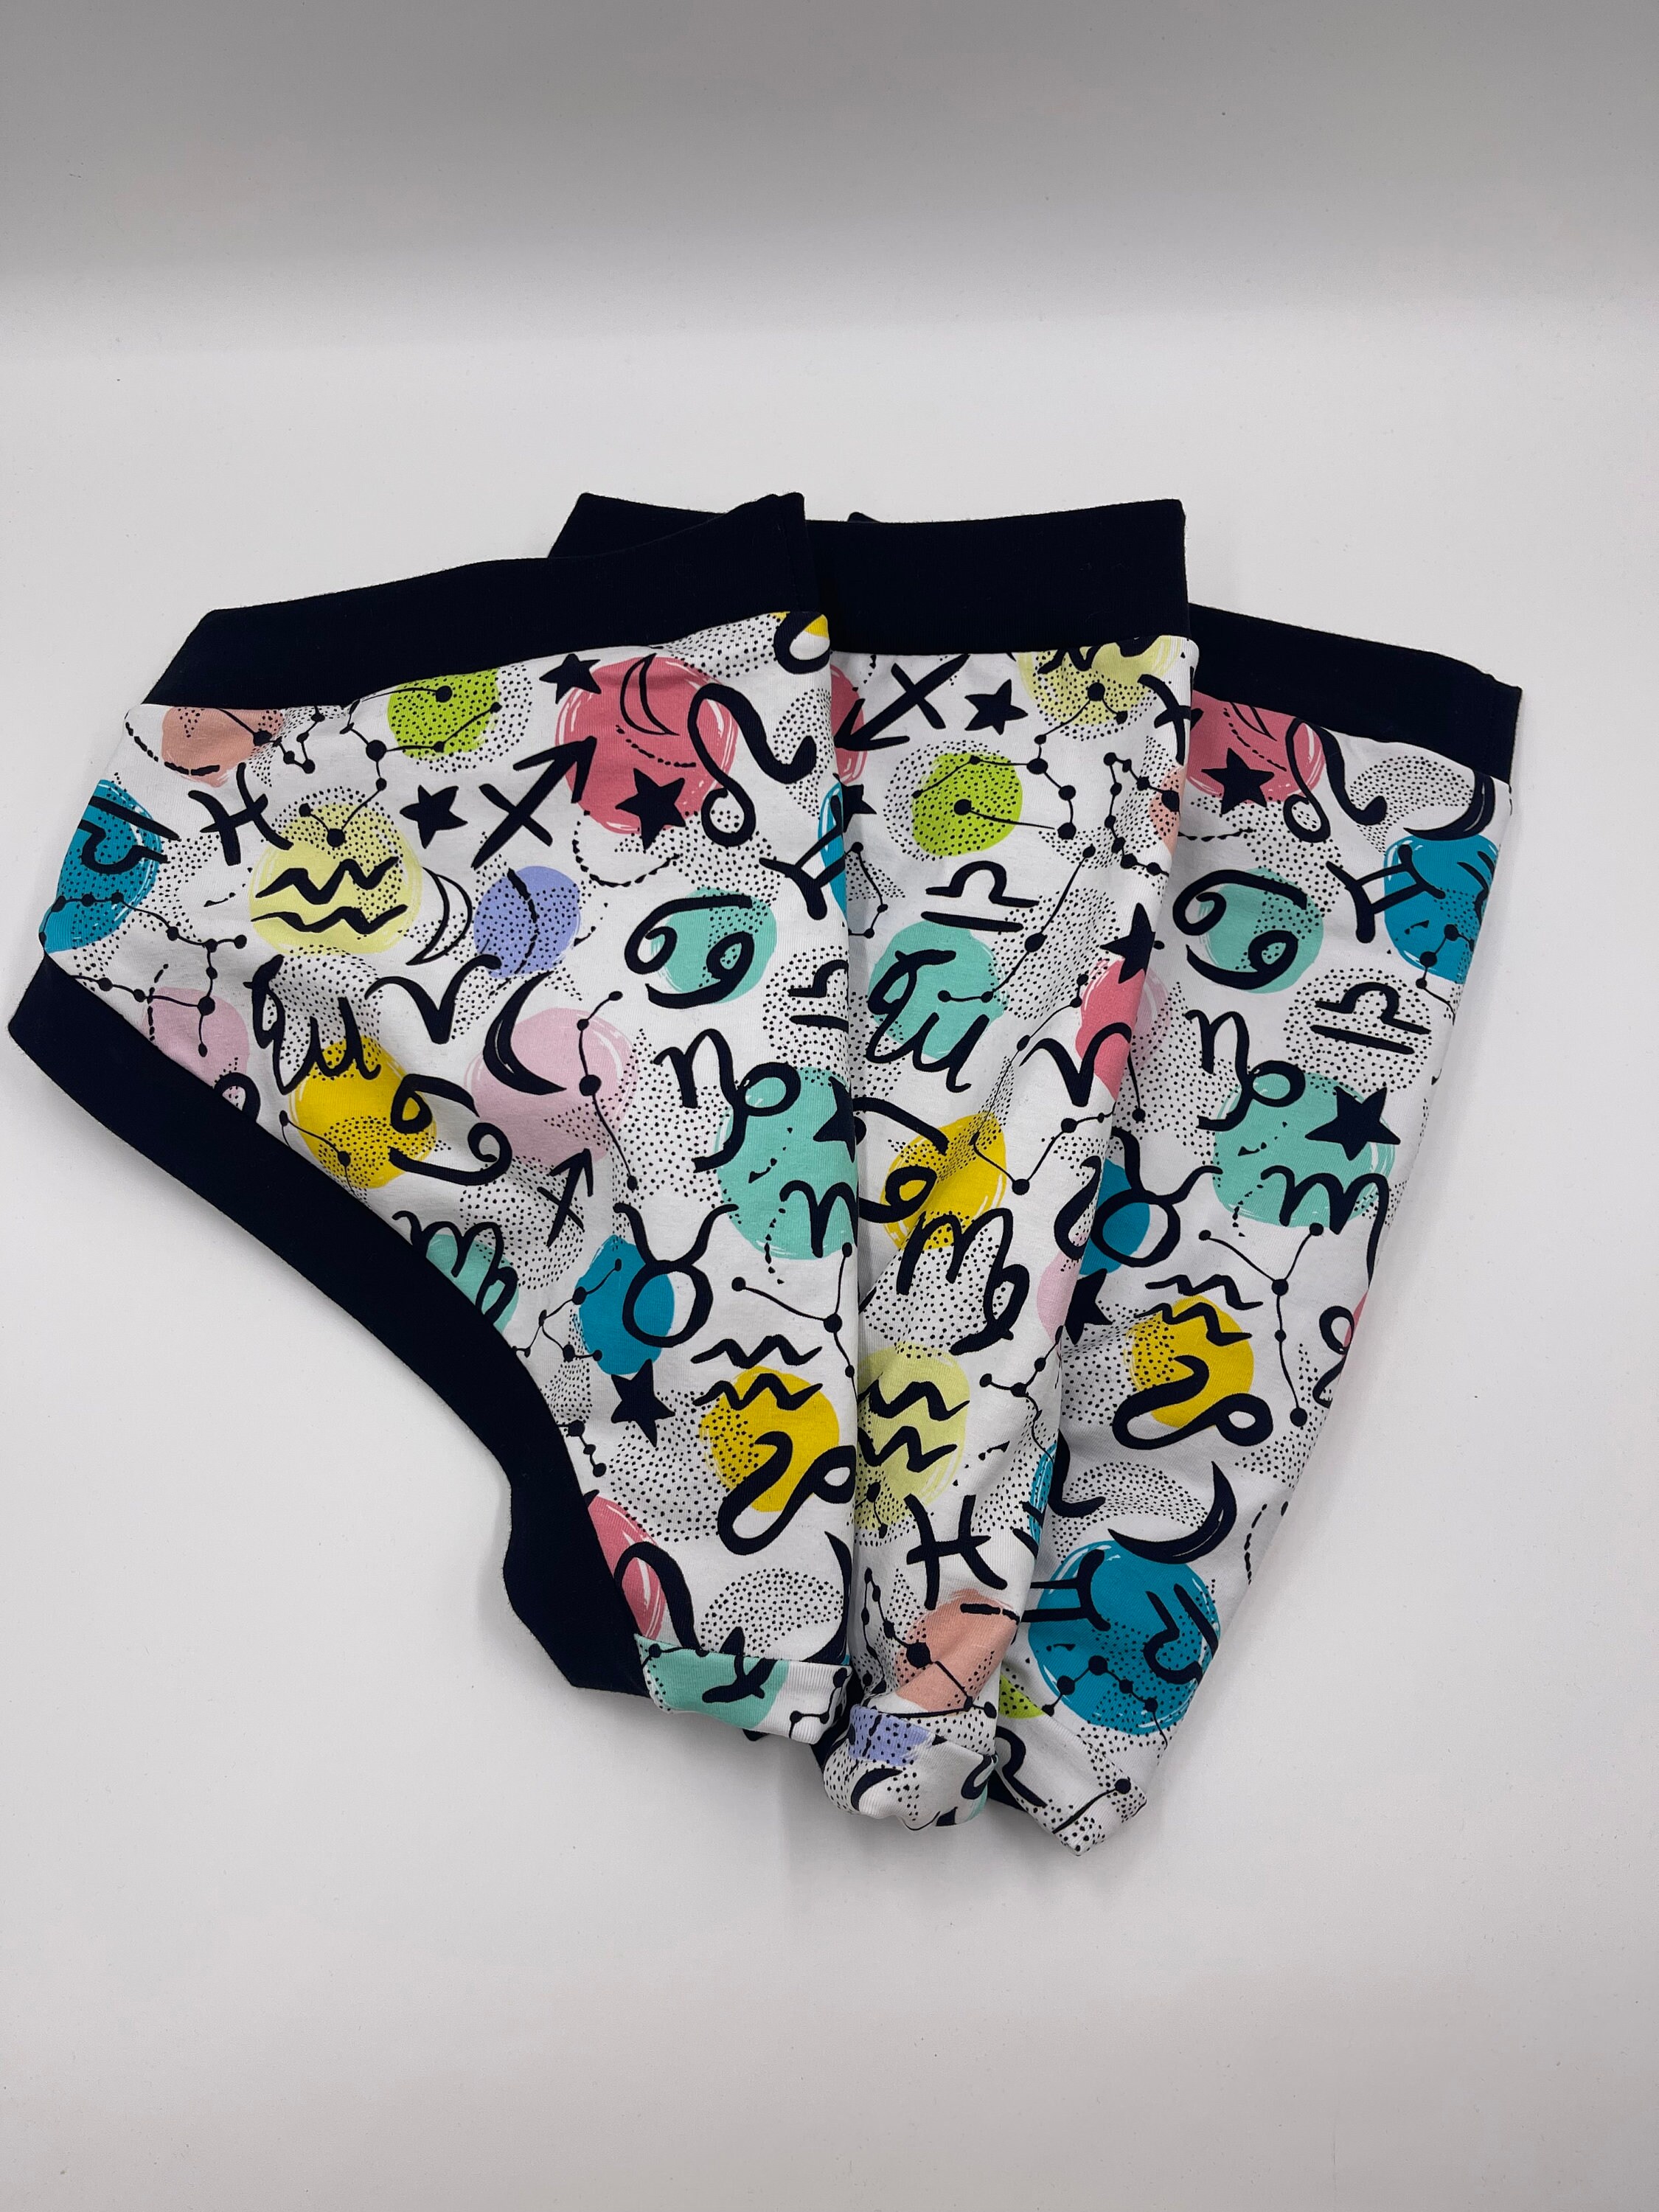 Aries Have More Fun Astrology Zodiac Sign Funny Women's Boyshort Underwear  Panties